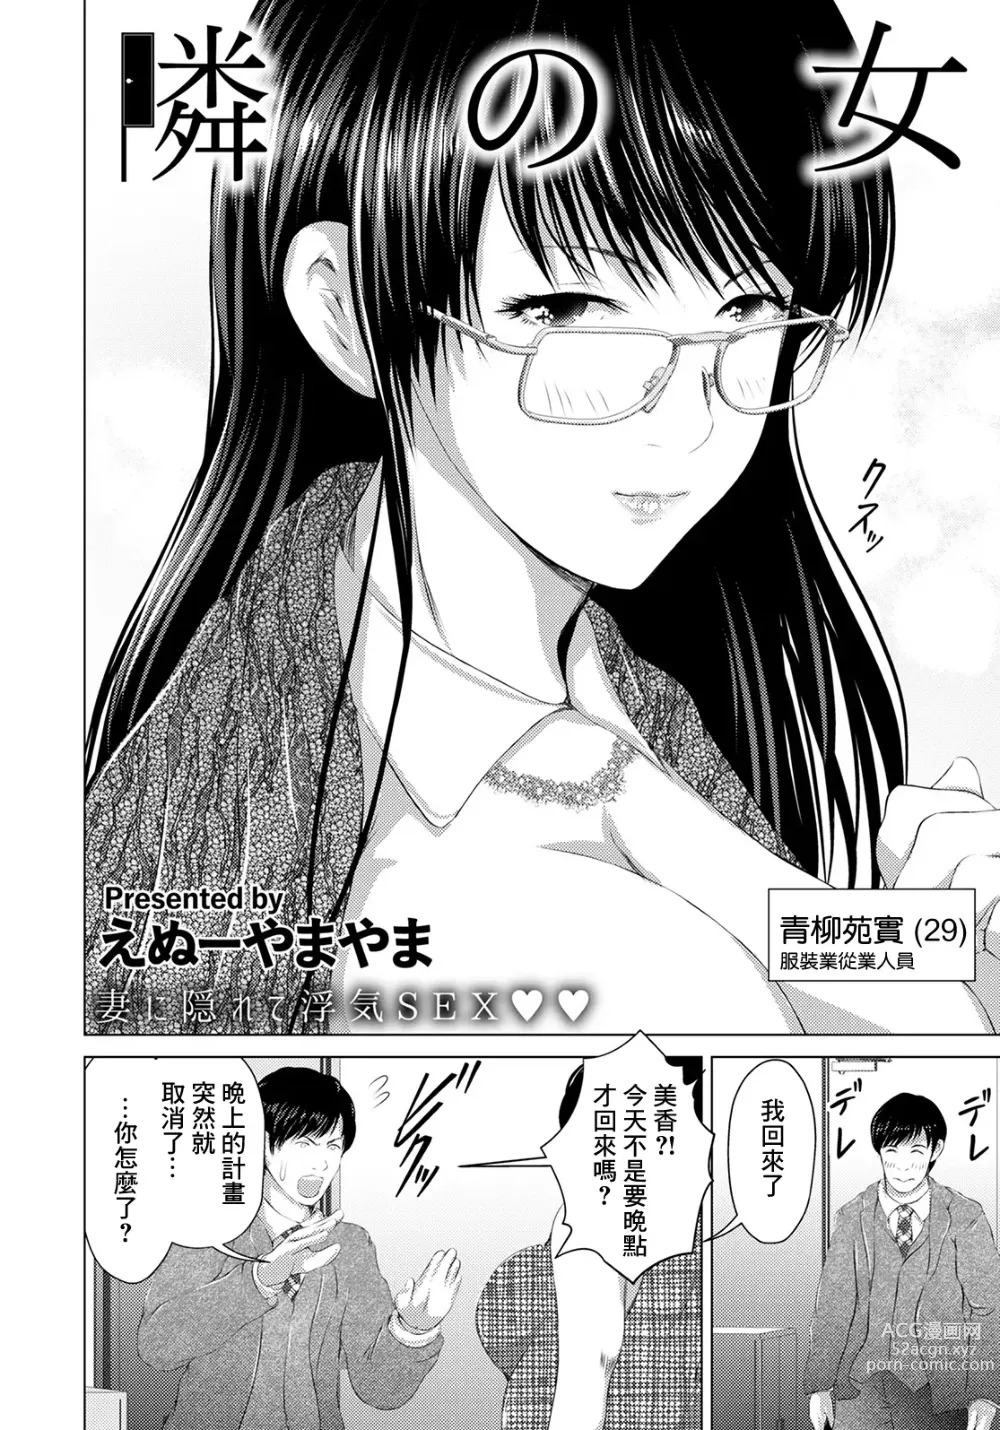 Page 2 of manga Tonari no Onna